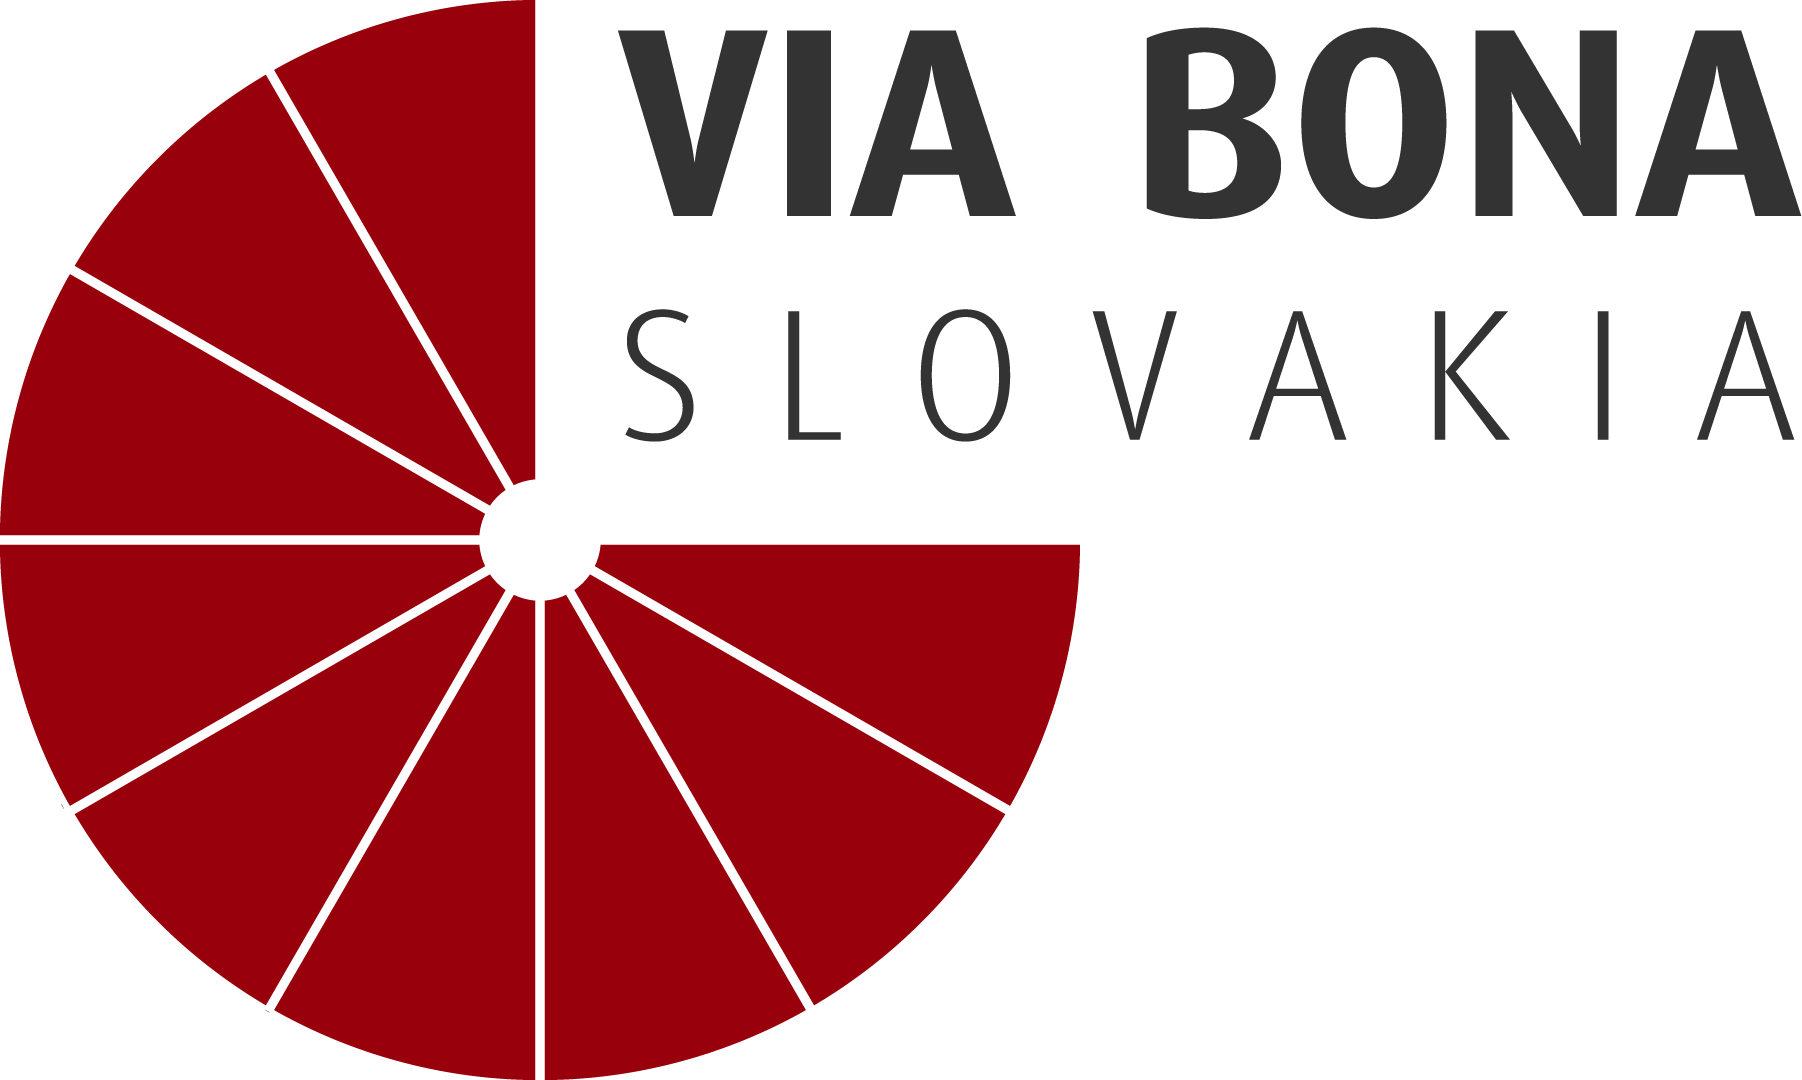 About Via Bona logo